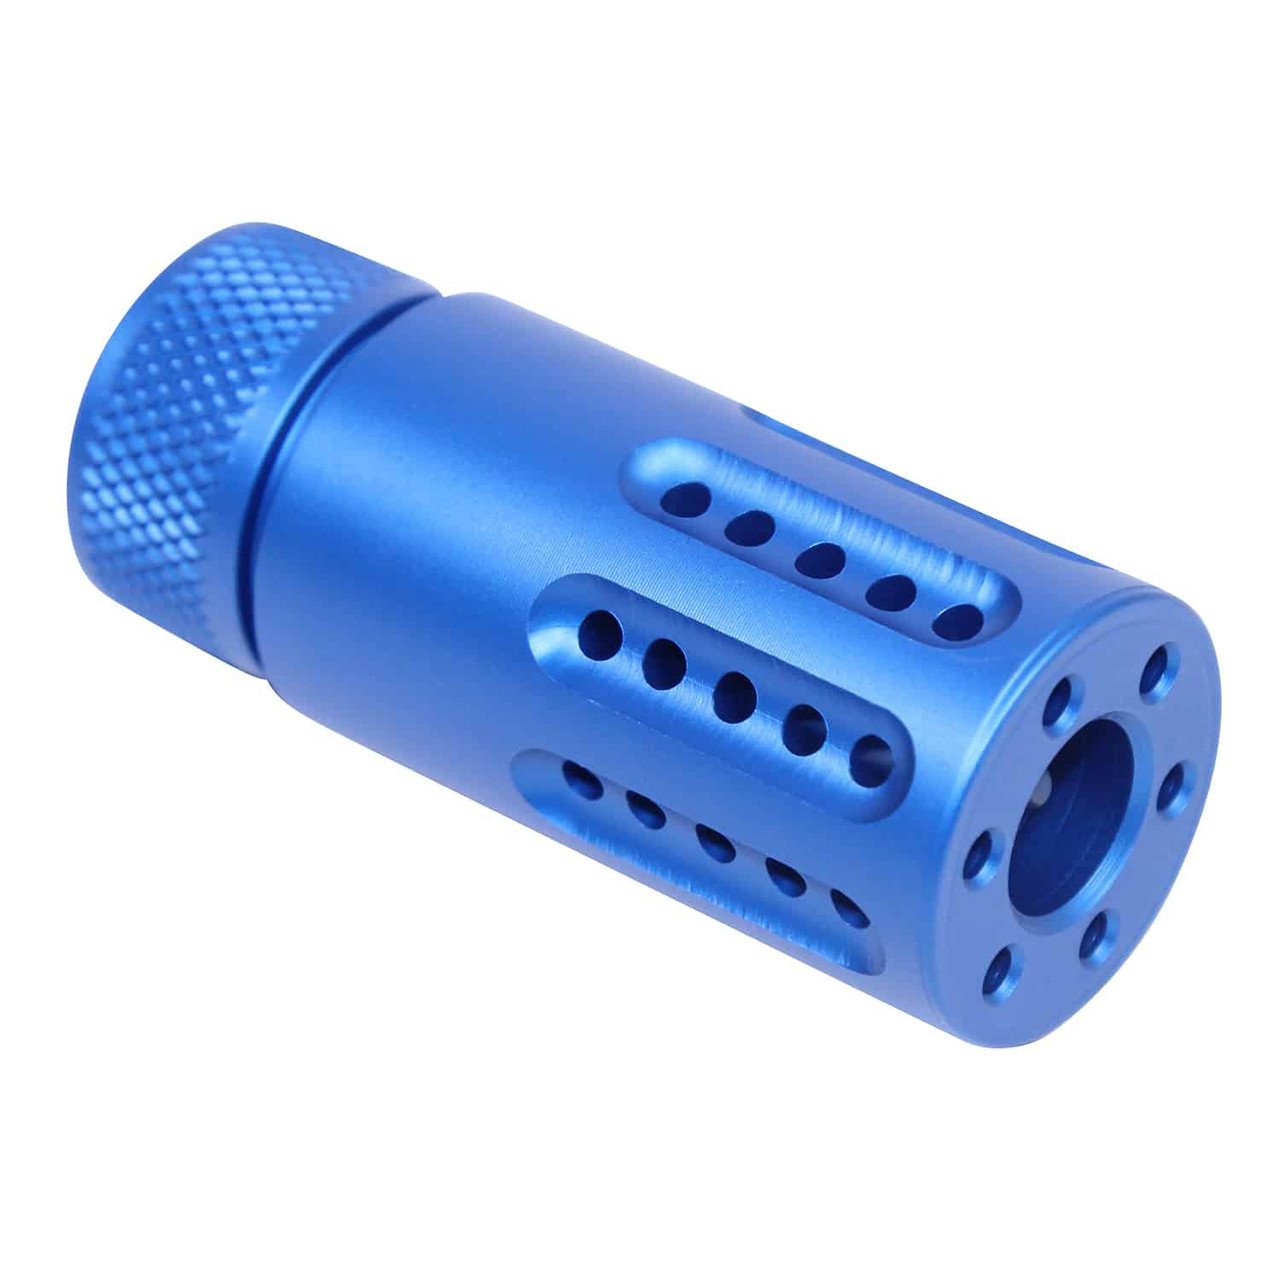 Guntec USA 1326-MB-P-S-BLUE Micro Slip Over Barrel Shroud With Multi Port Muzzle Brake (Anodized Blue)